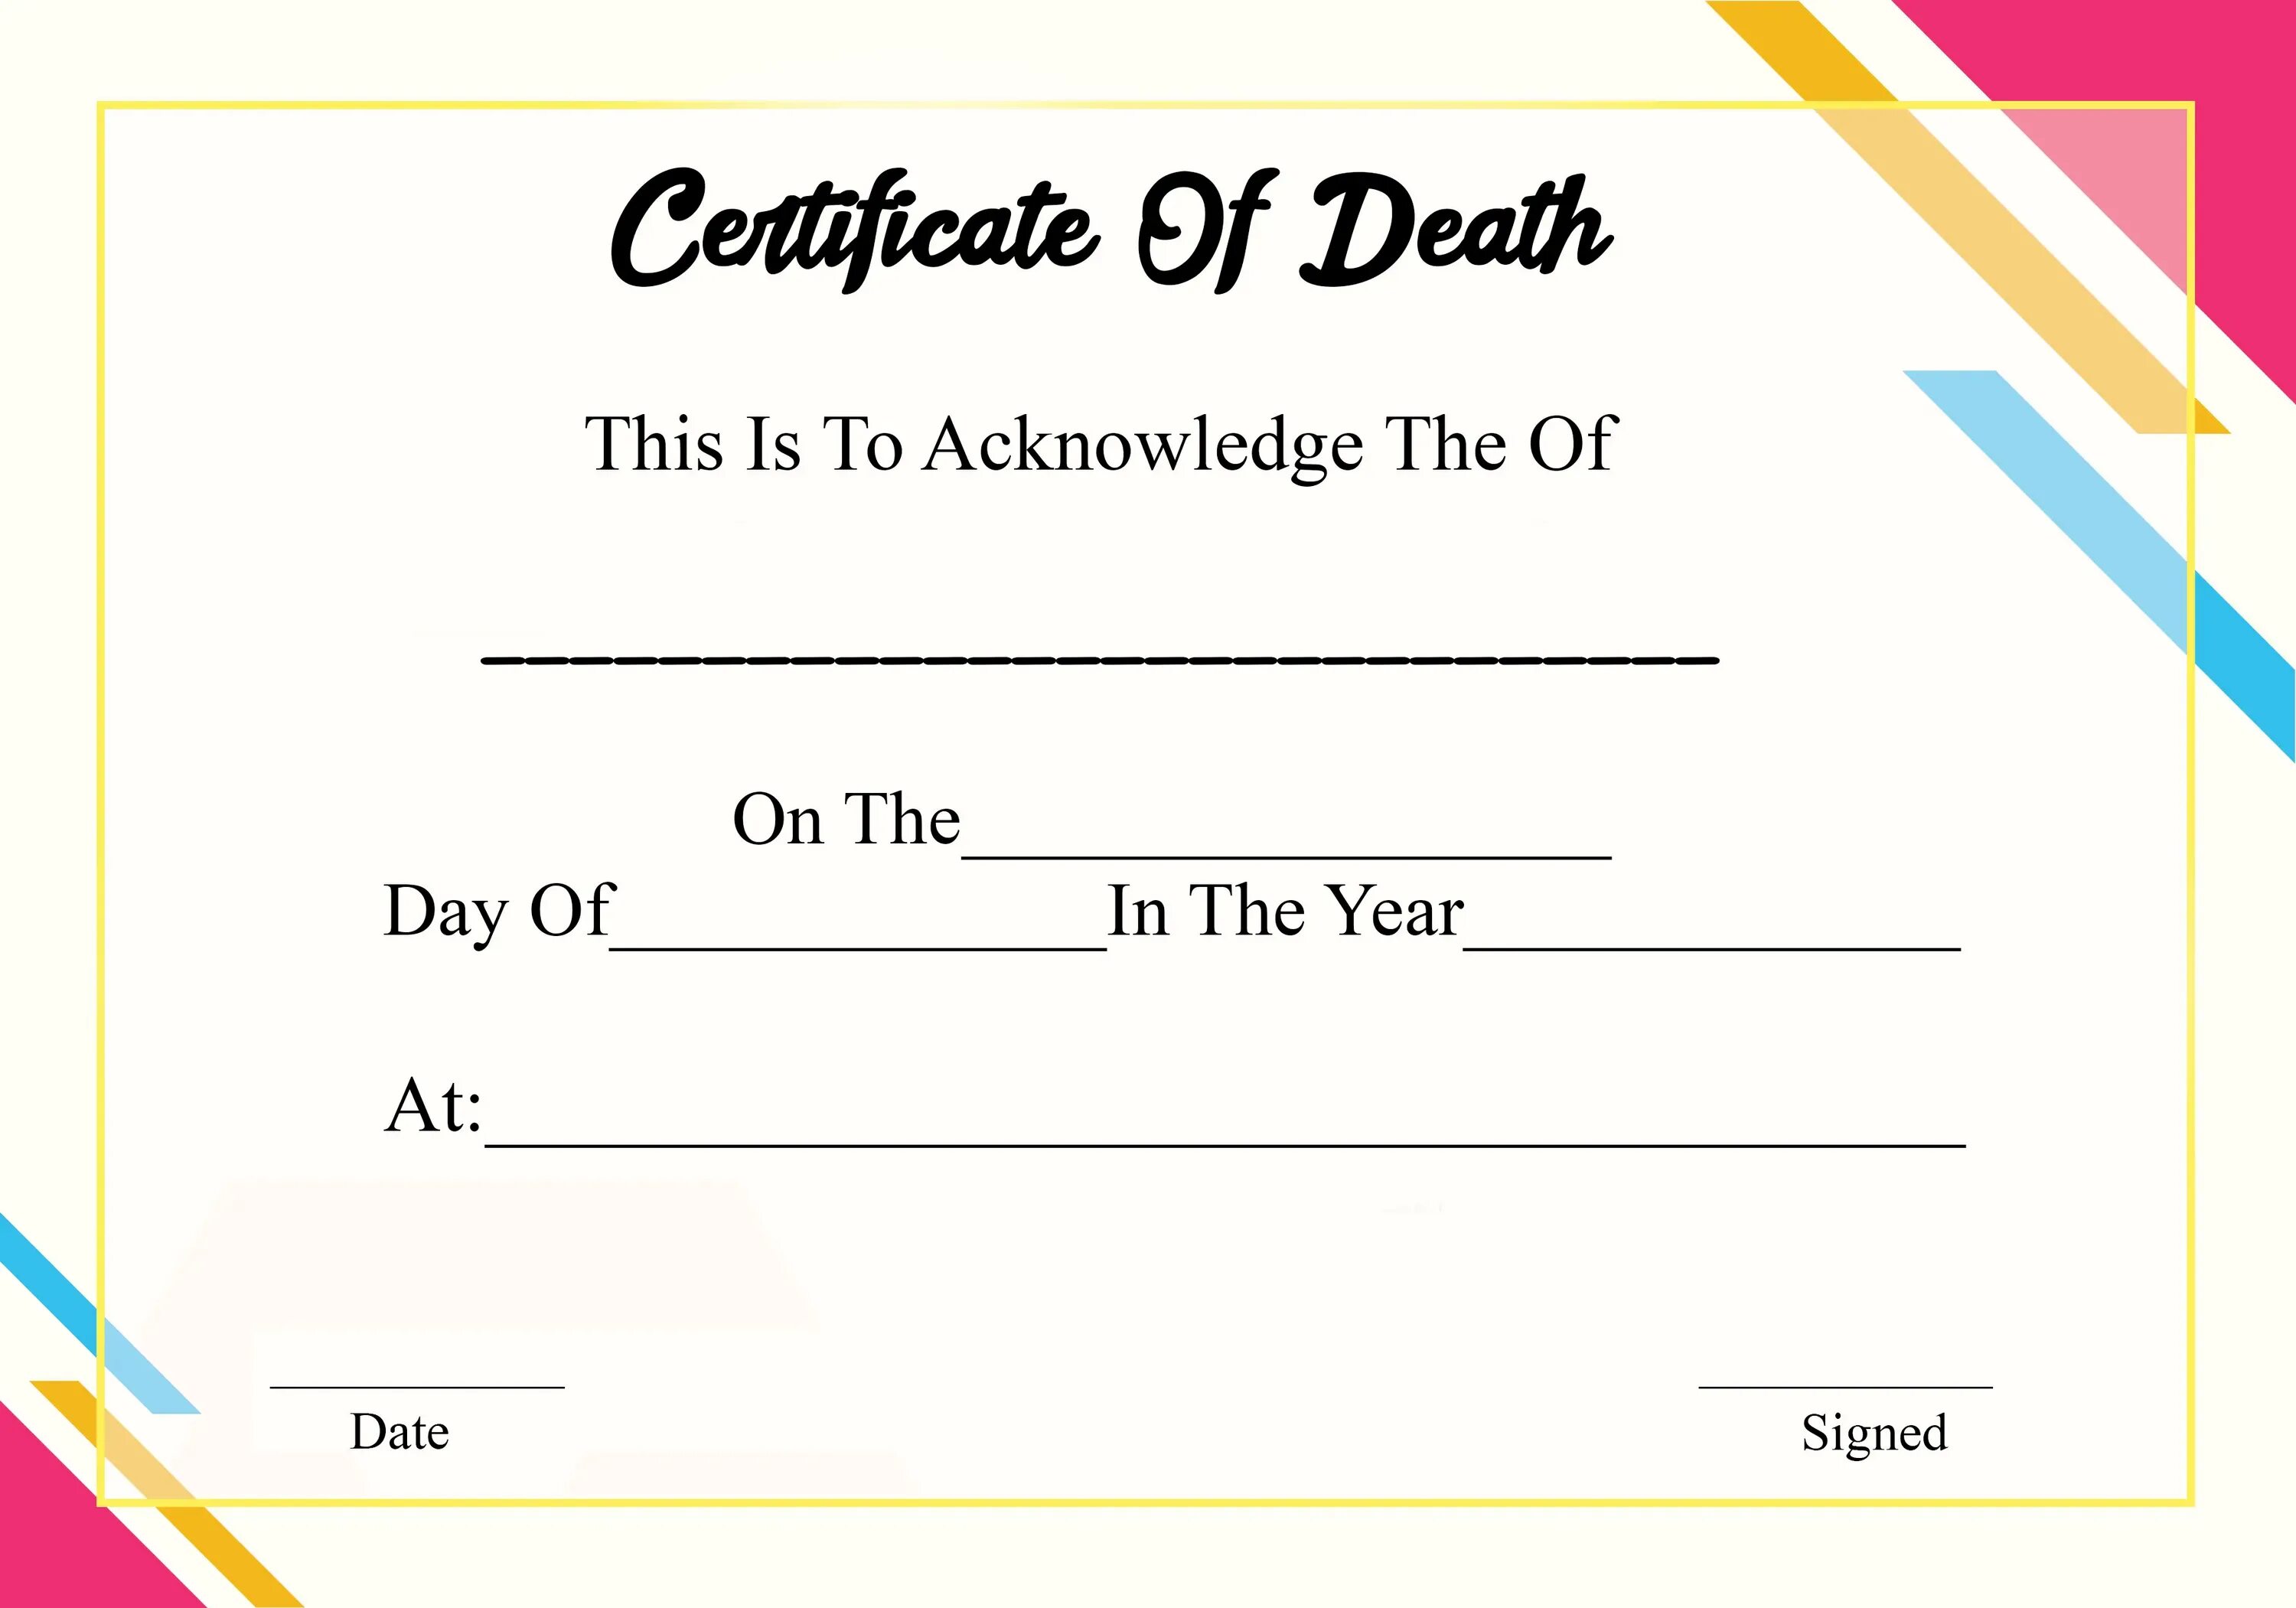 Death Certificate Template. Death Certificate Cube. Certificate of Death Indonesia бланк.